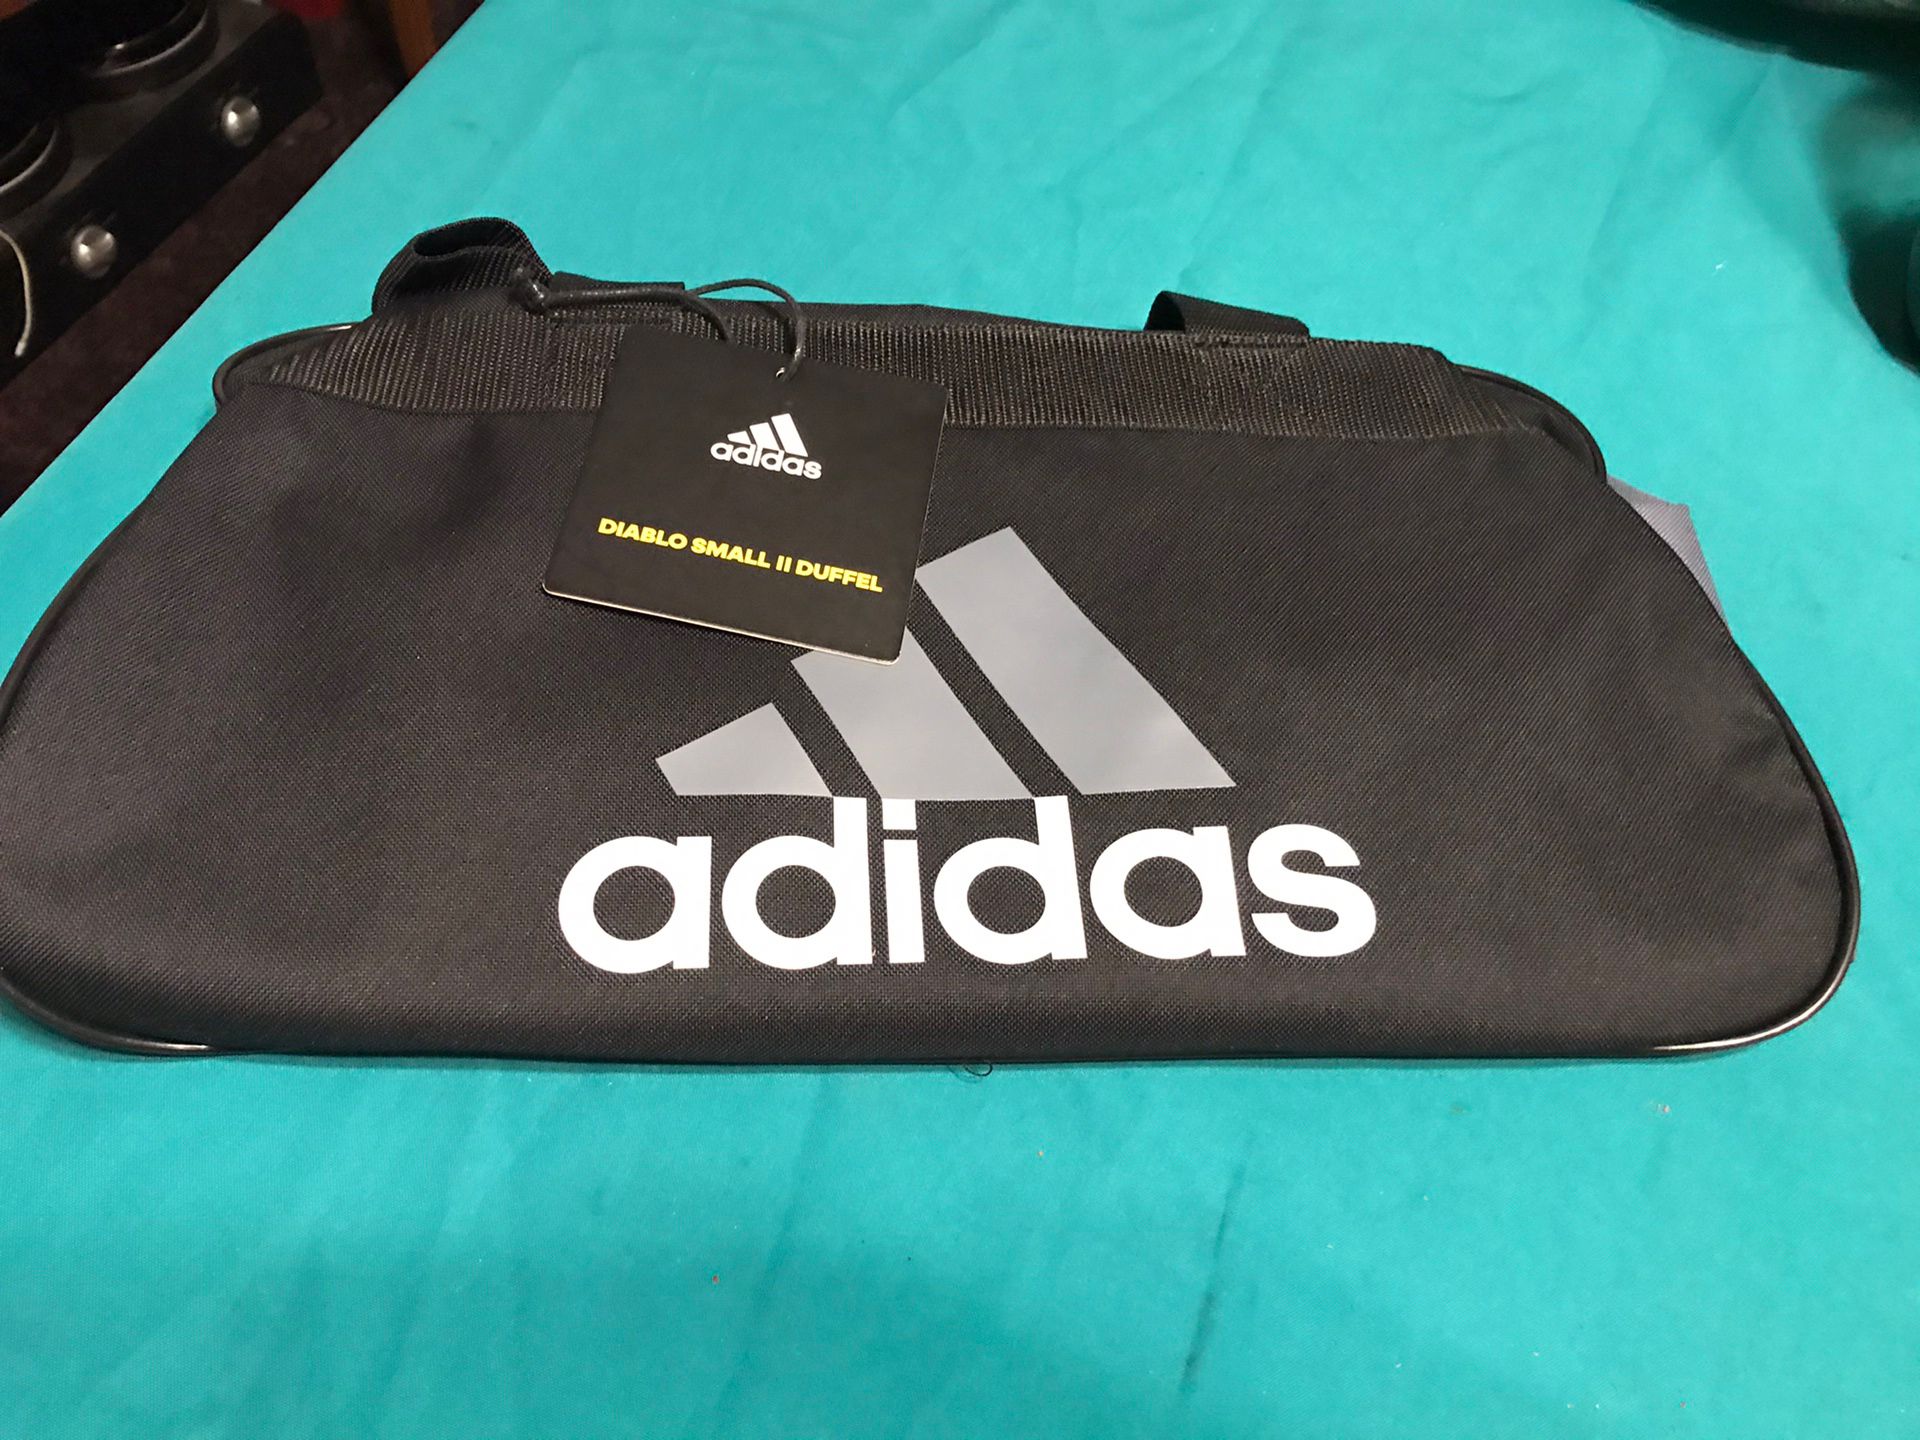 Adidas Diablo Small II Duffel Bag - Brand New with Tag